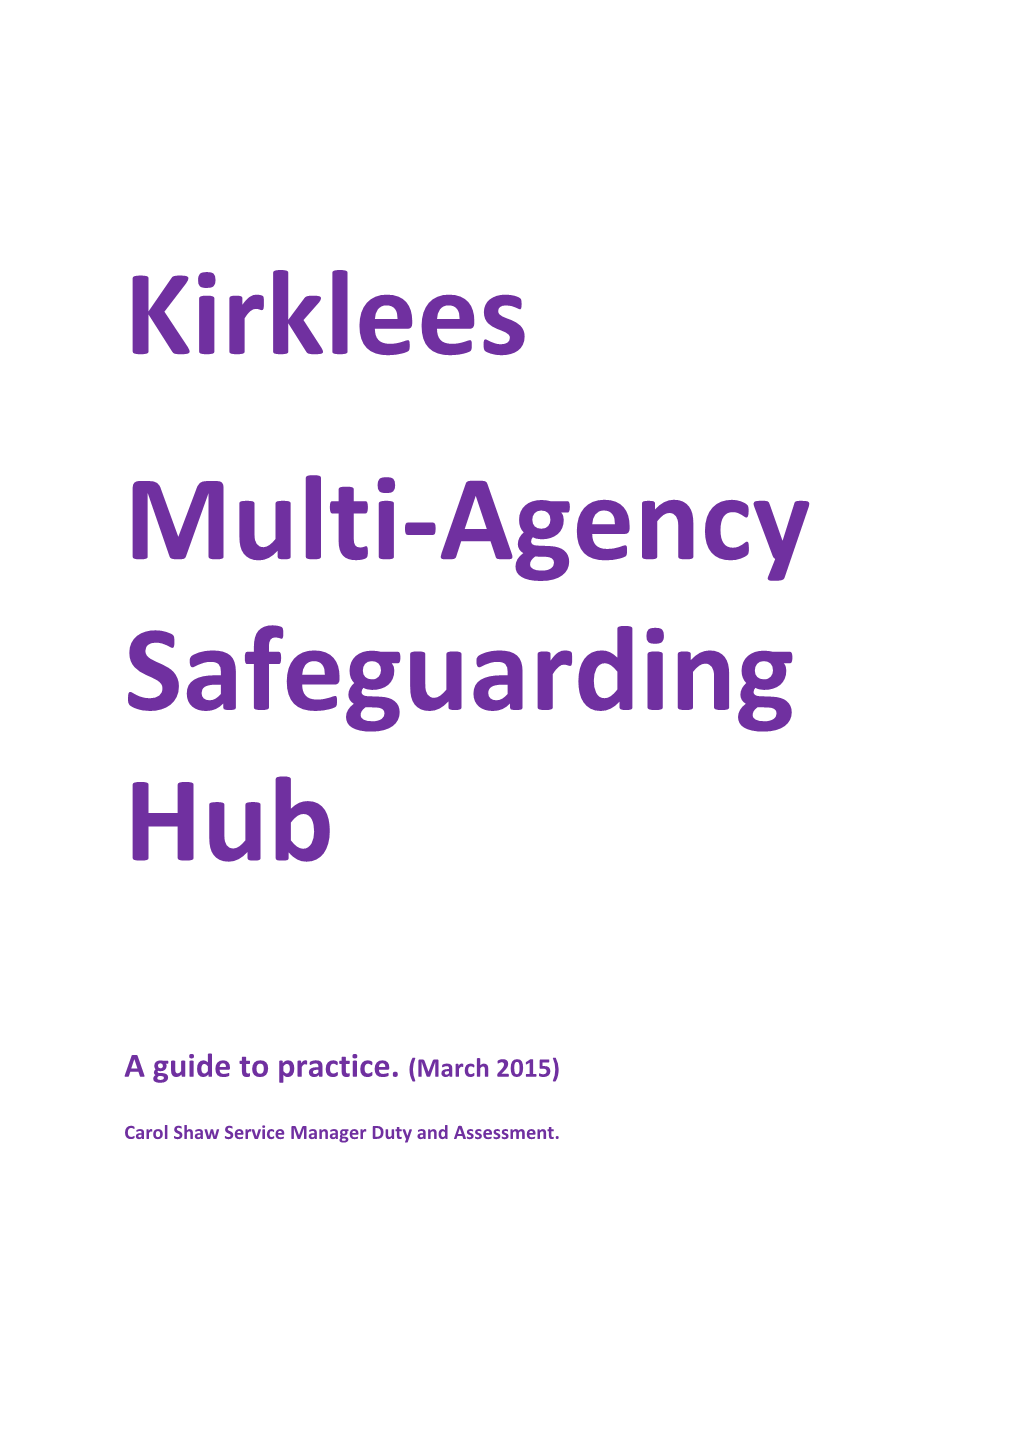 Multi-Agency Safeguarding Hub